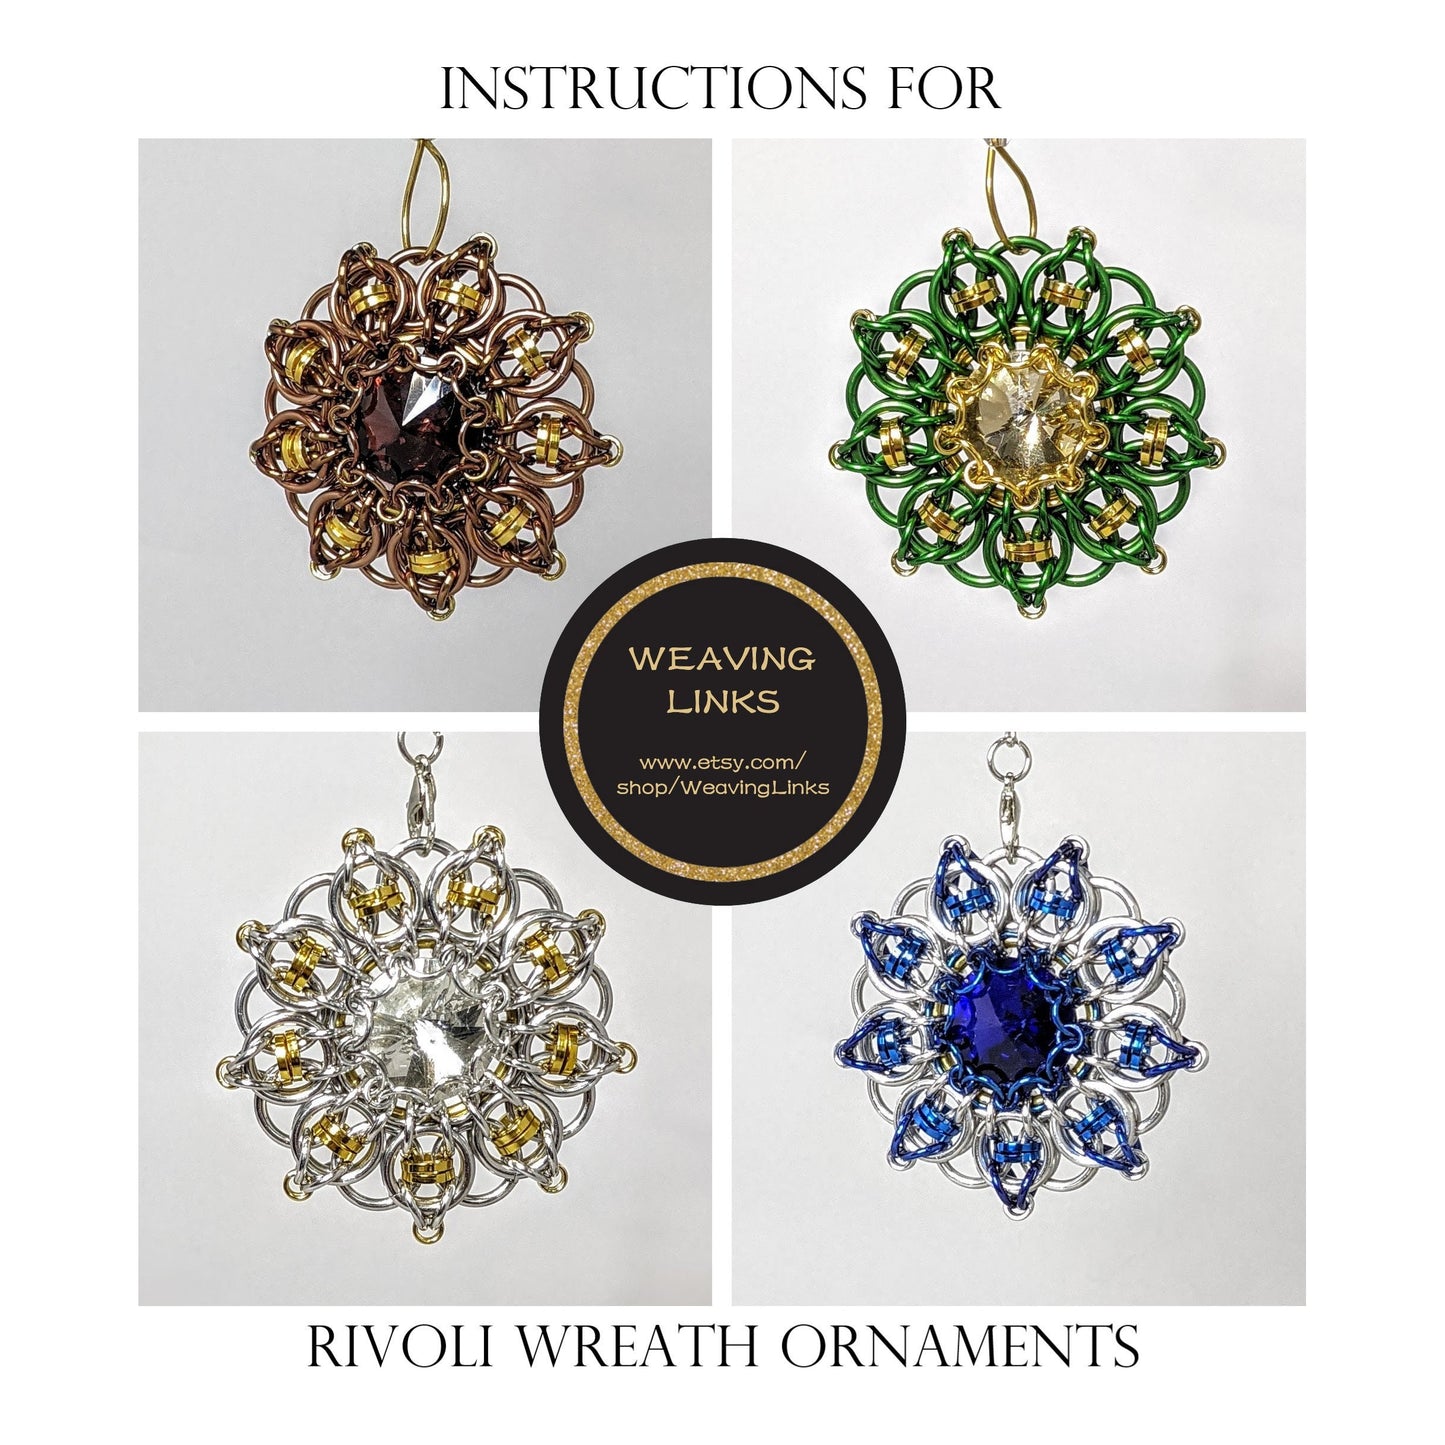 Instructions for Rivoli Wreath Ornament